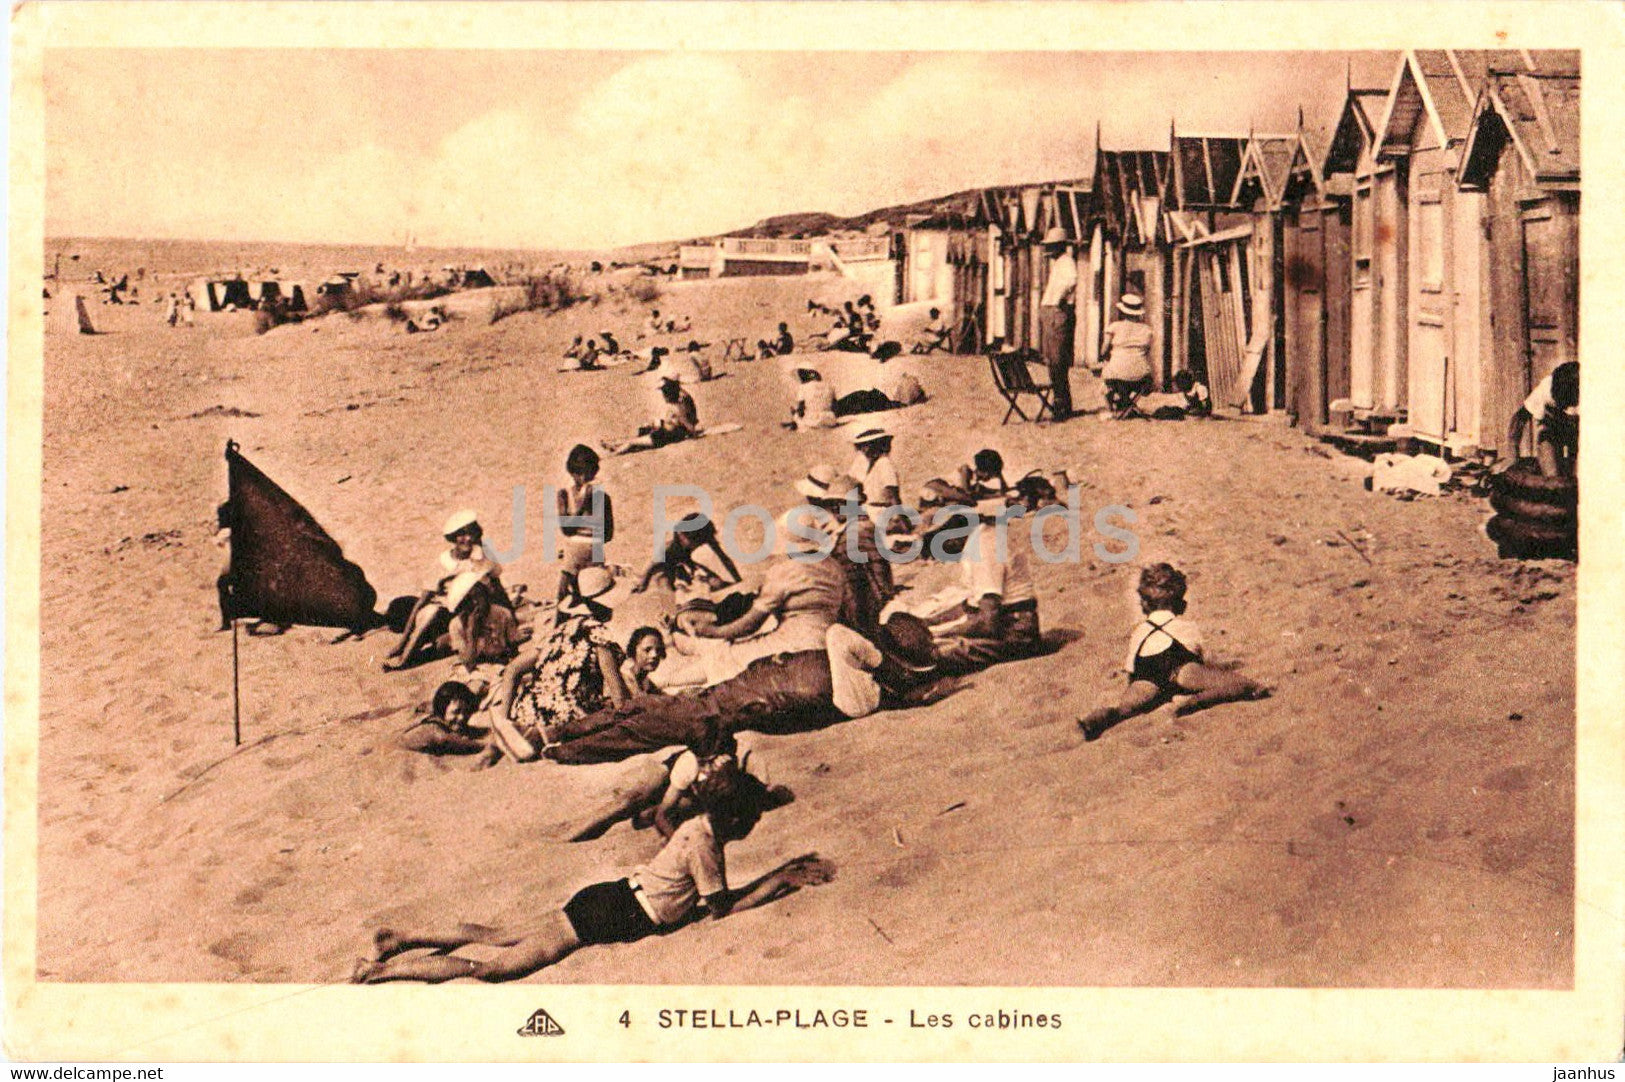 Stella Plage - Les Cabines - beach - 4 - old postcard - France - unused - JH Postcards